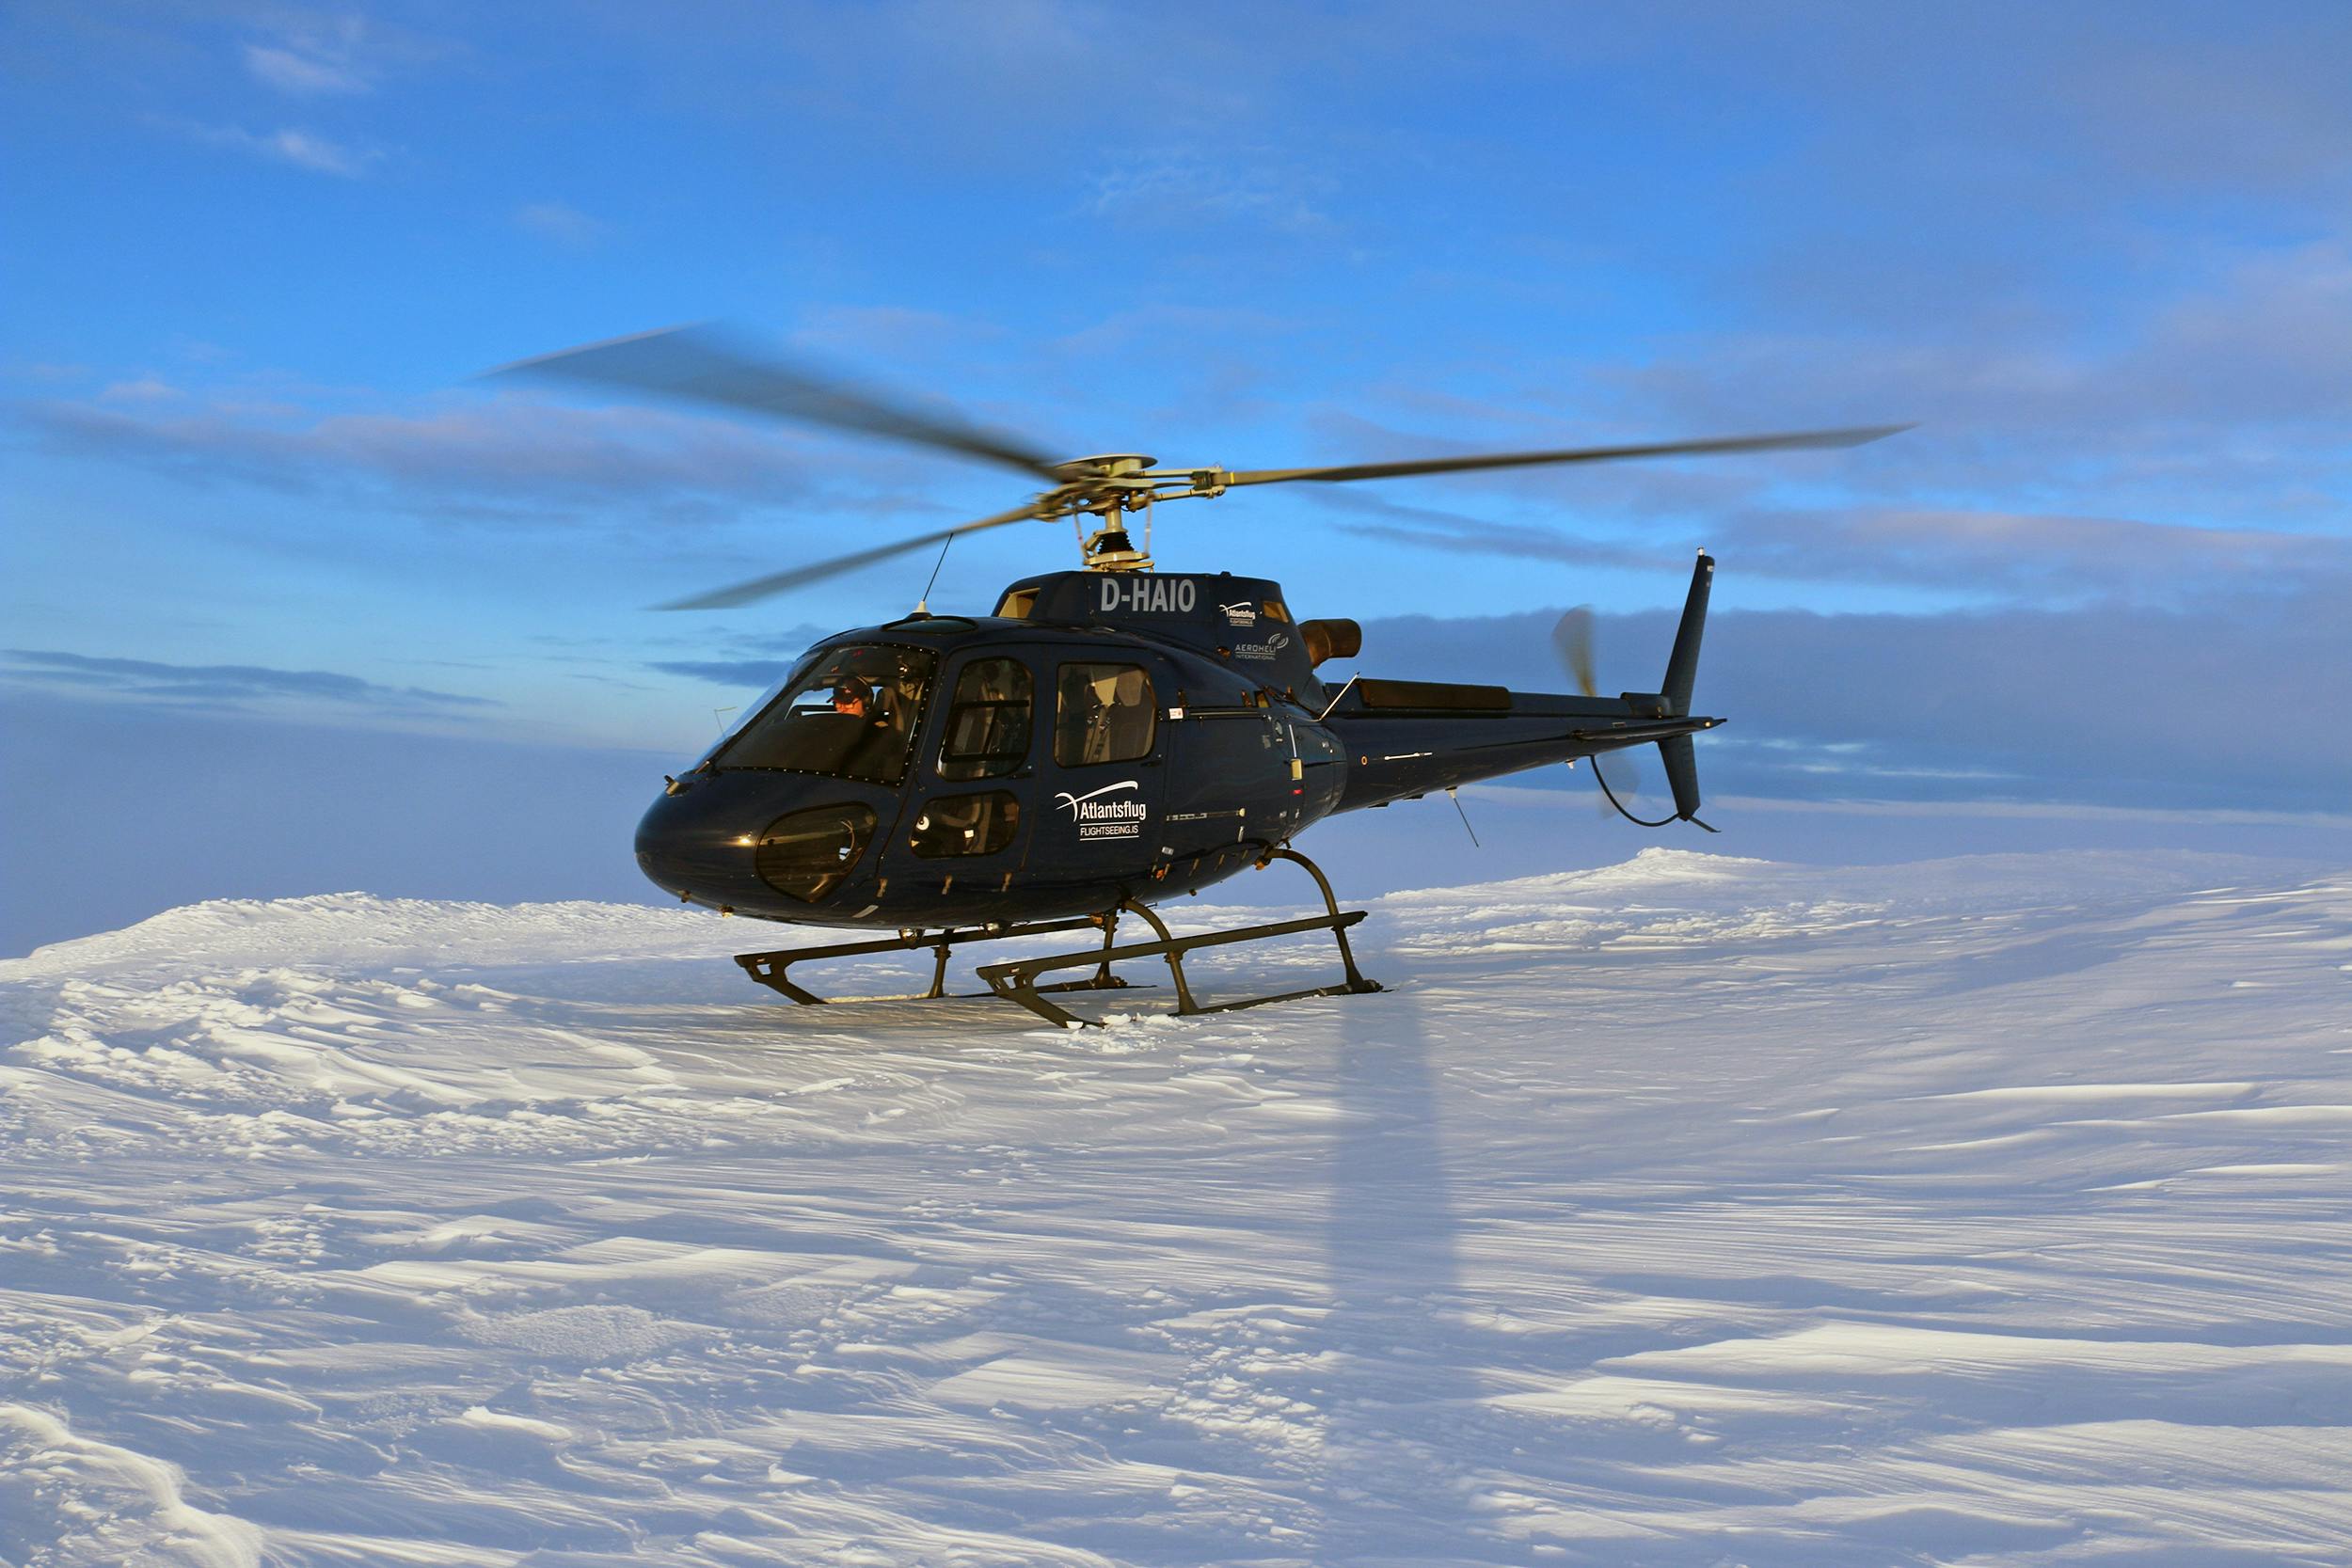 Grímsvötn Eruption Site Helicopter Tour from Skaftafell